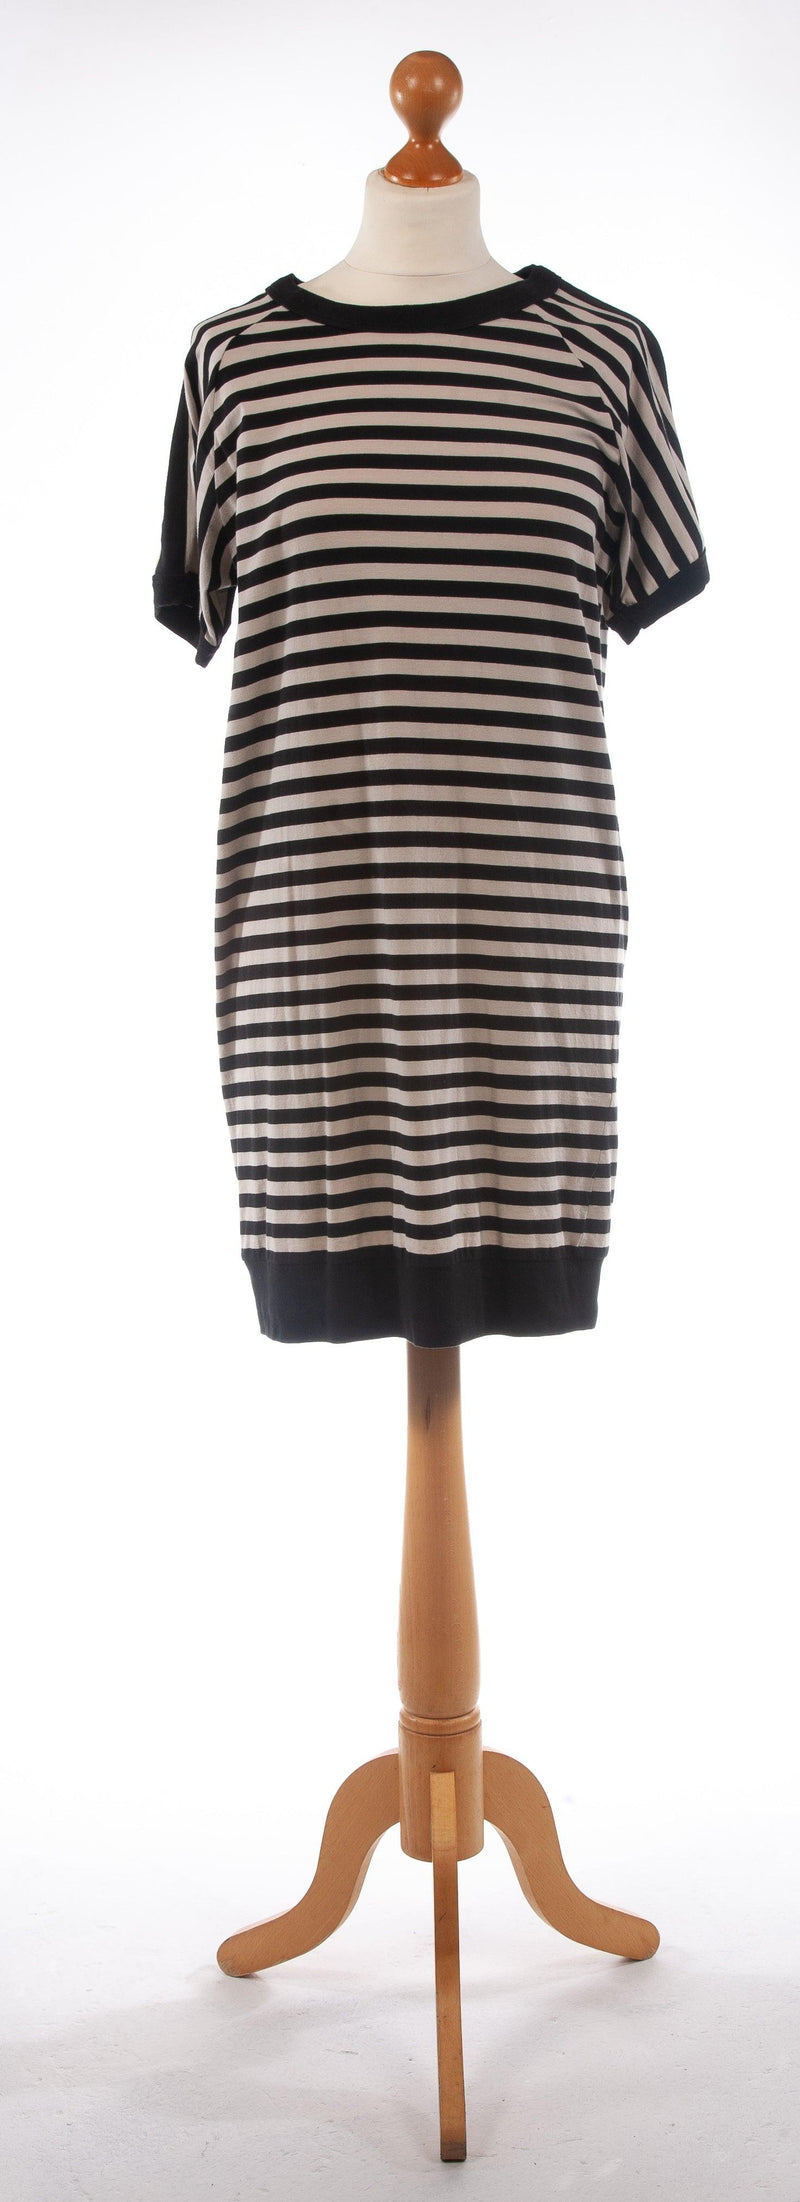 DKNY Black and Cream Striped Cotton Dress Size S (UK 8) - Ava & Iva